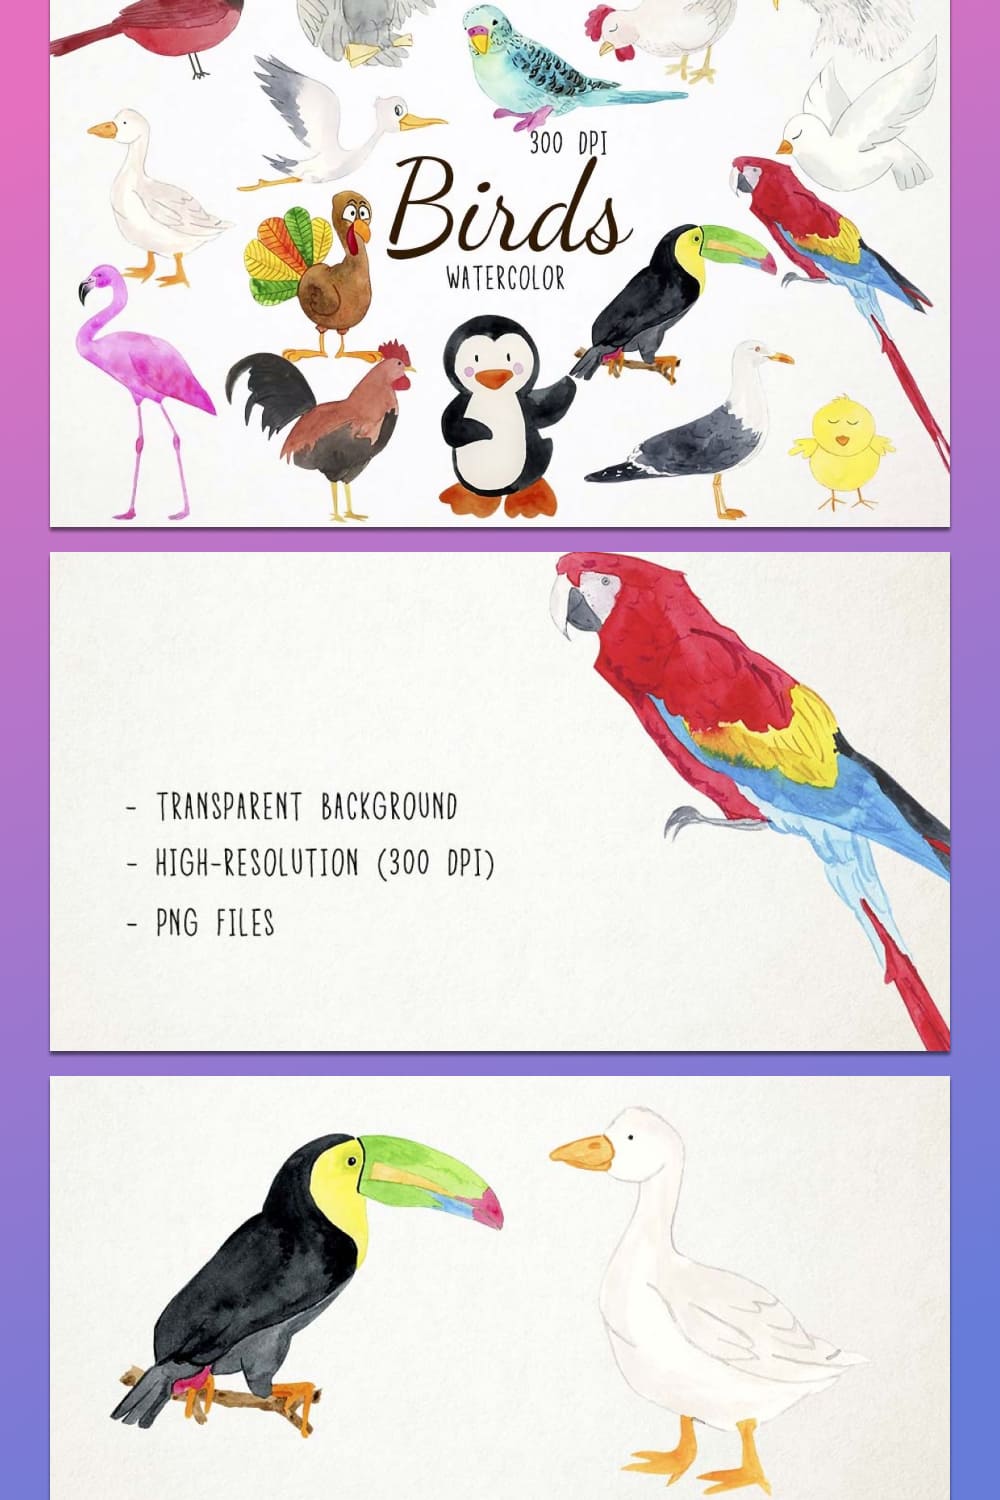 Watercolor Birds Clipart - pinterest image preview.